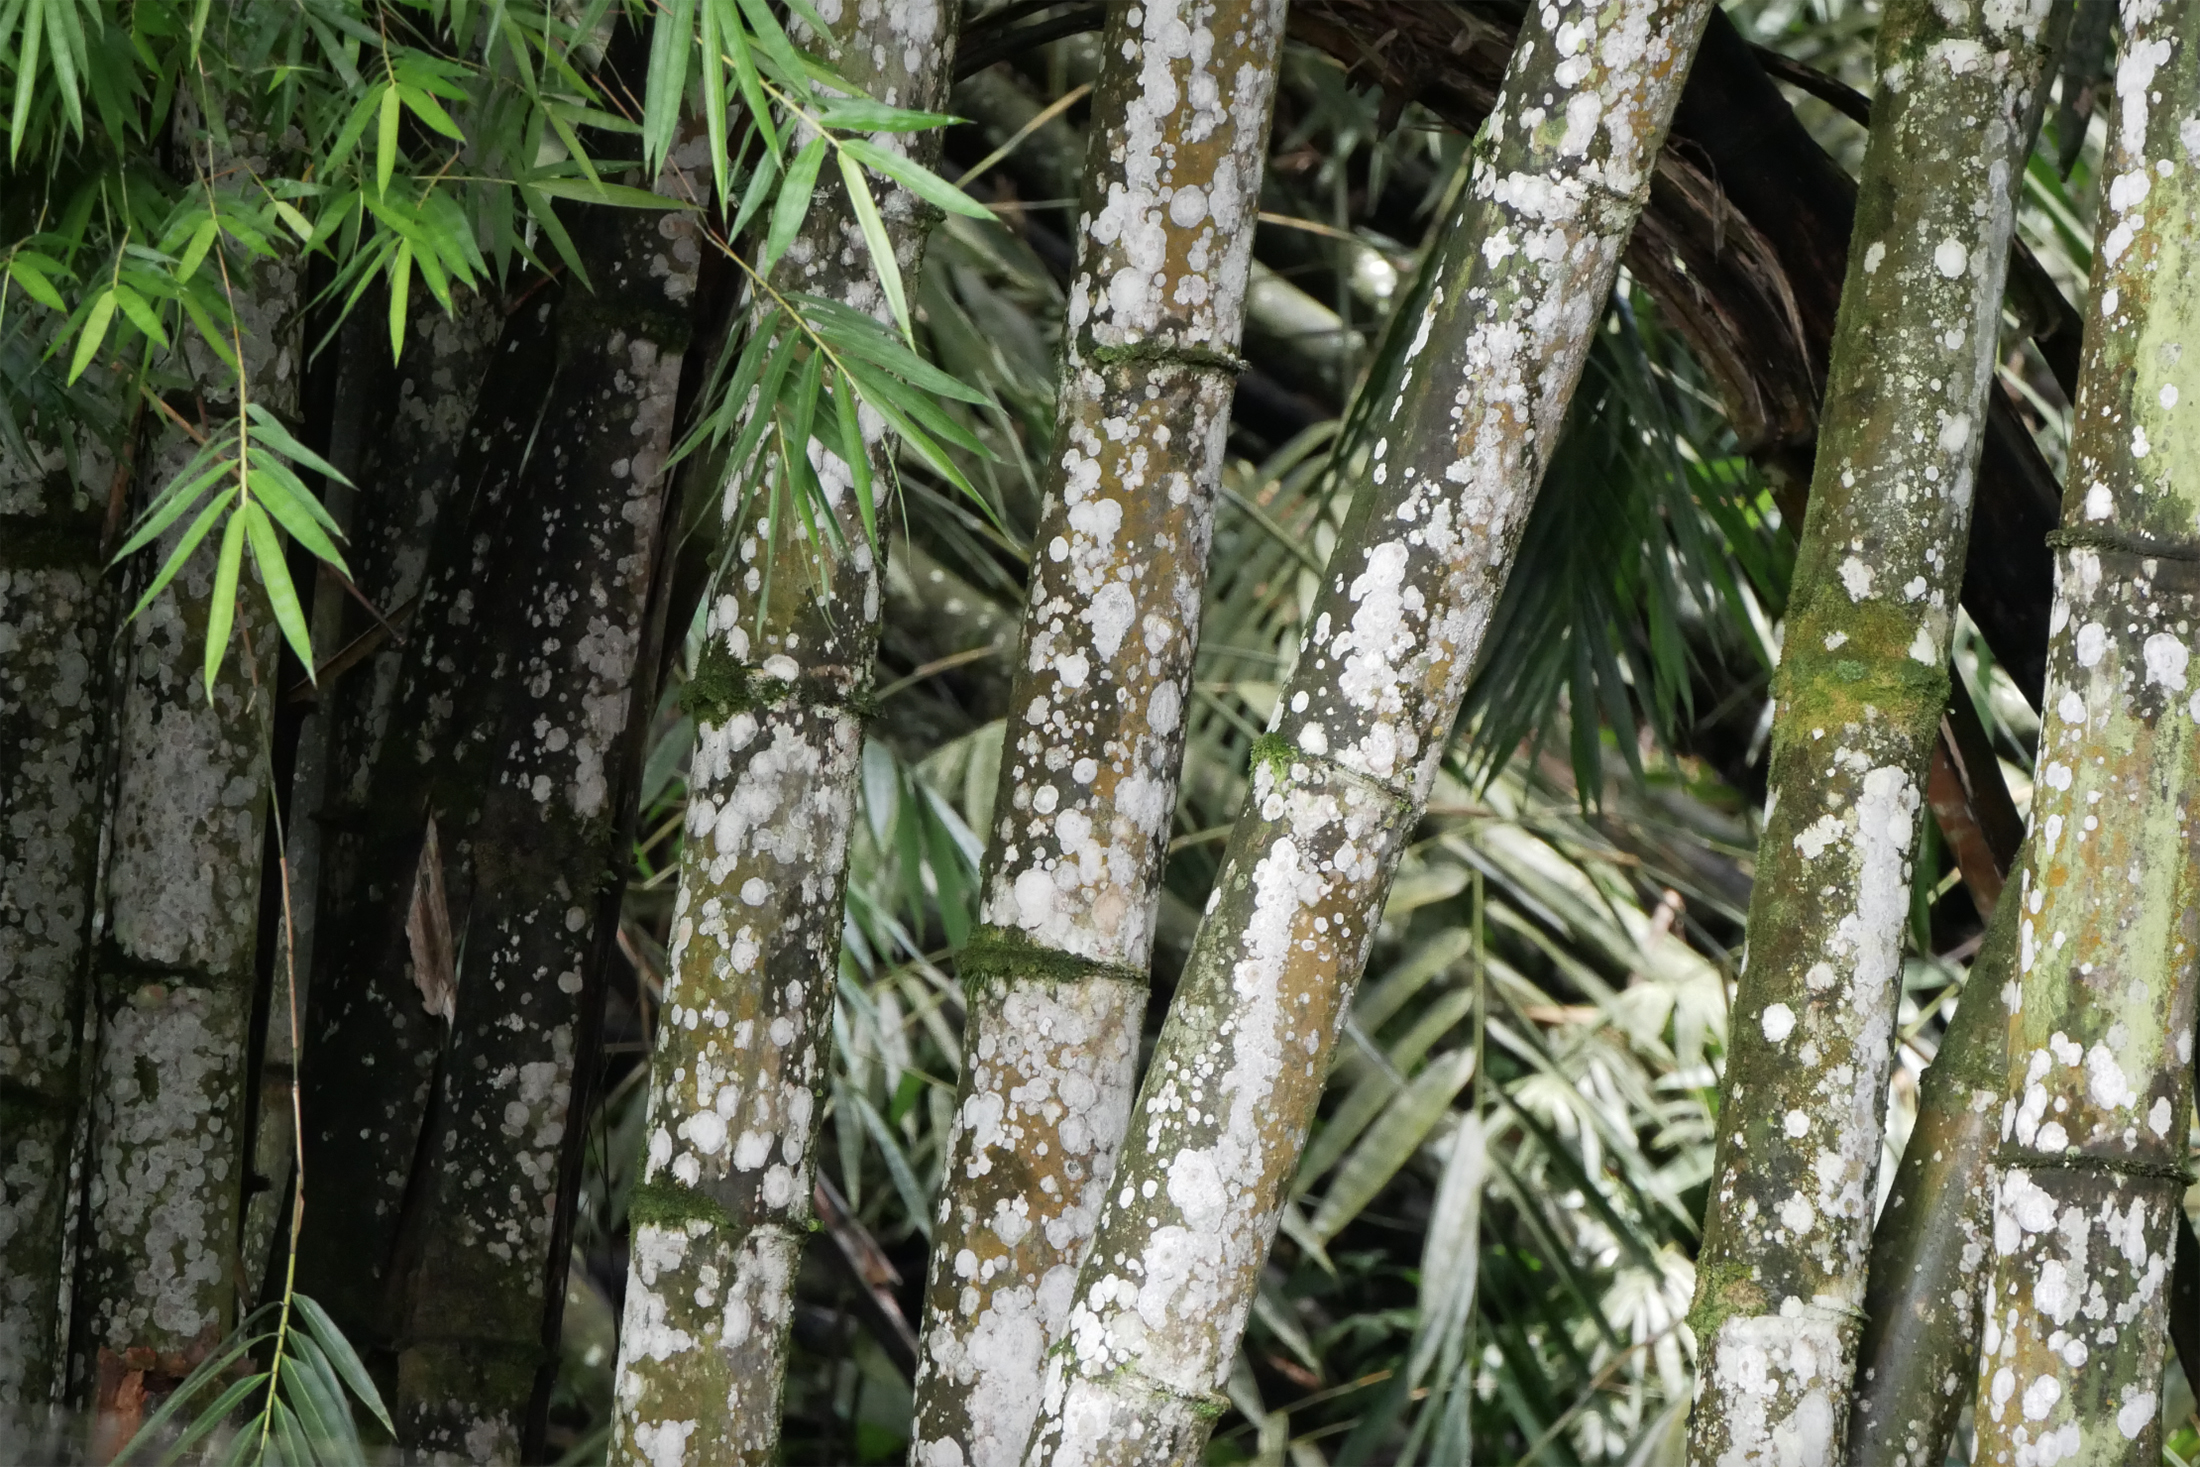 healthy bamboo plants growing in Ecuador